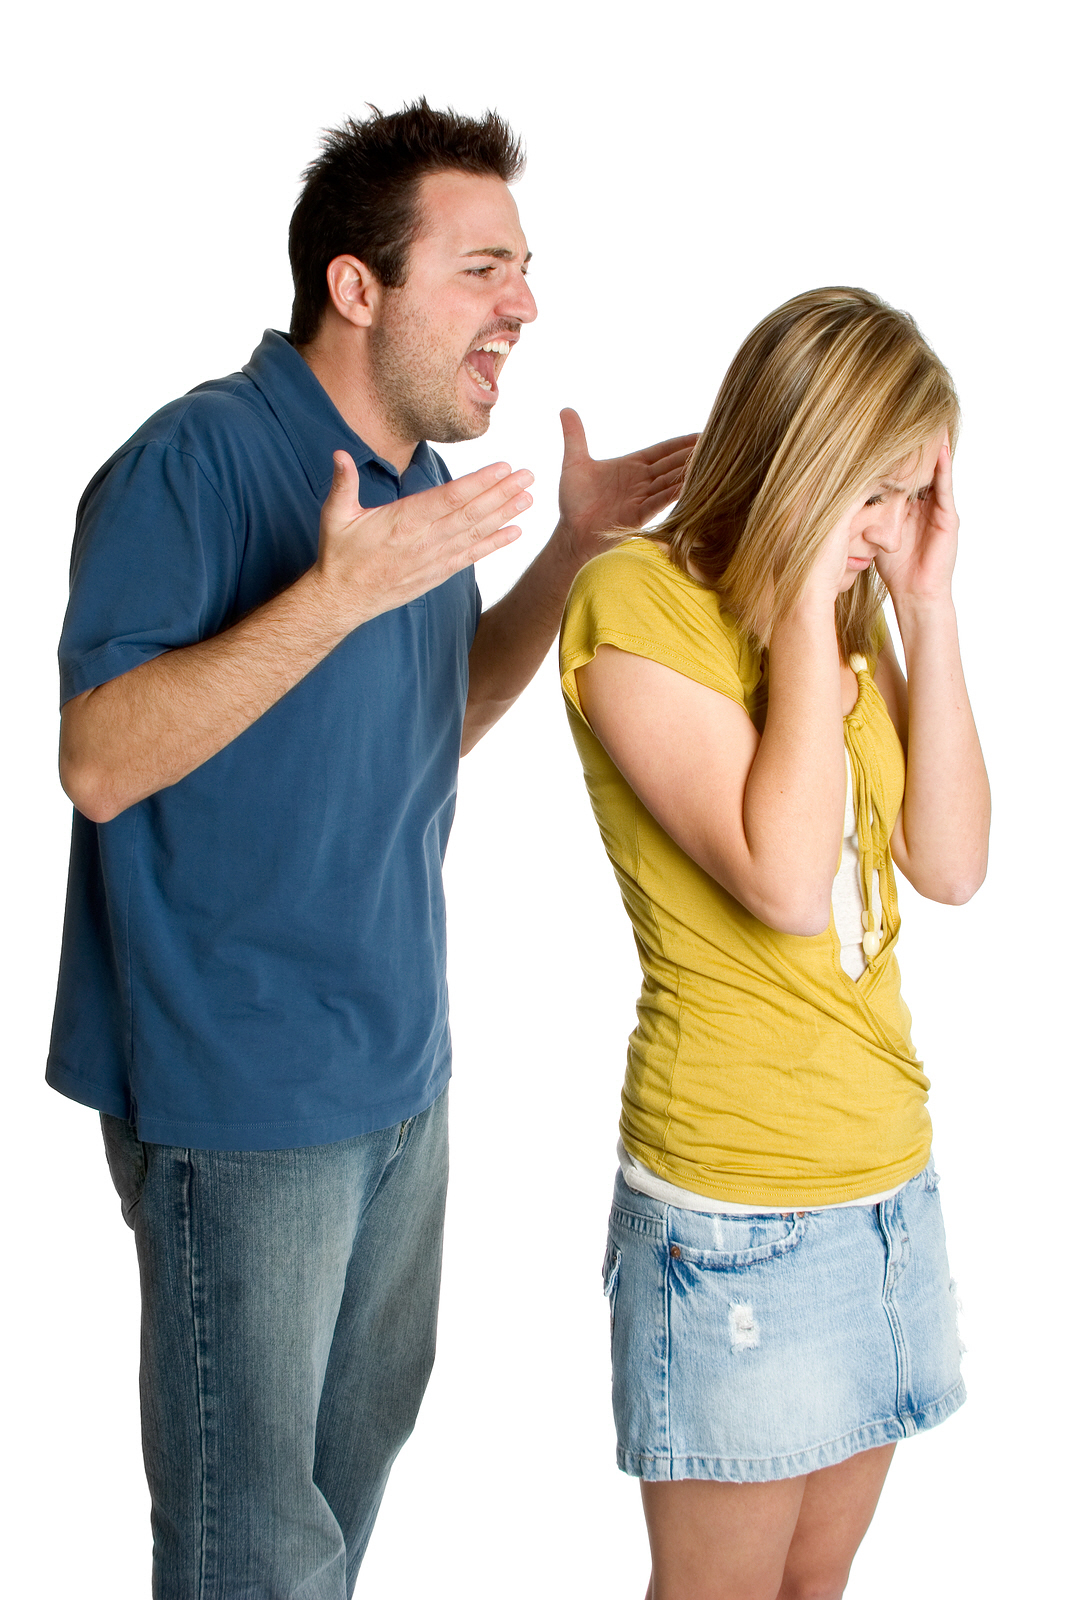 Can An Unhappy Marriage Shorten your Life? The Research